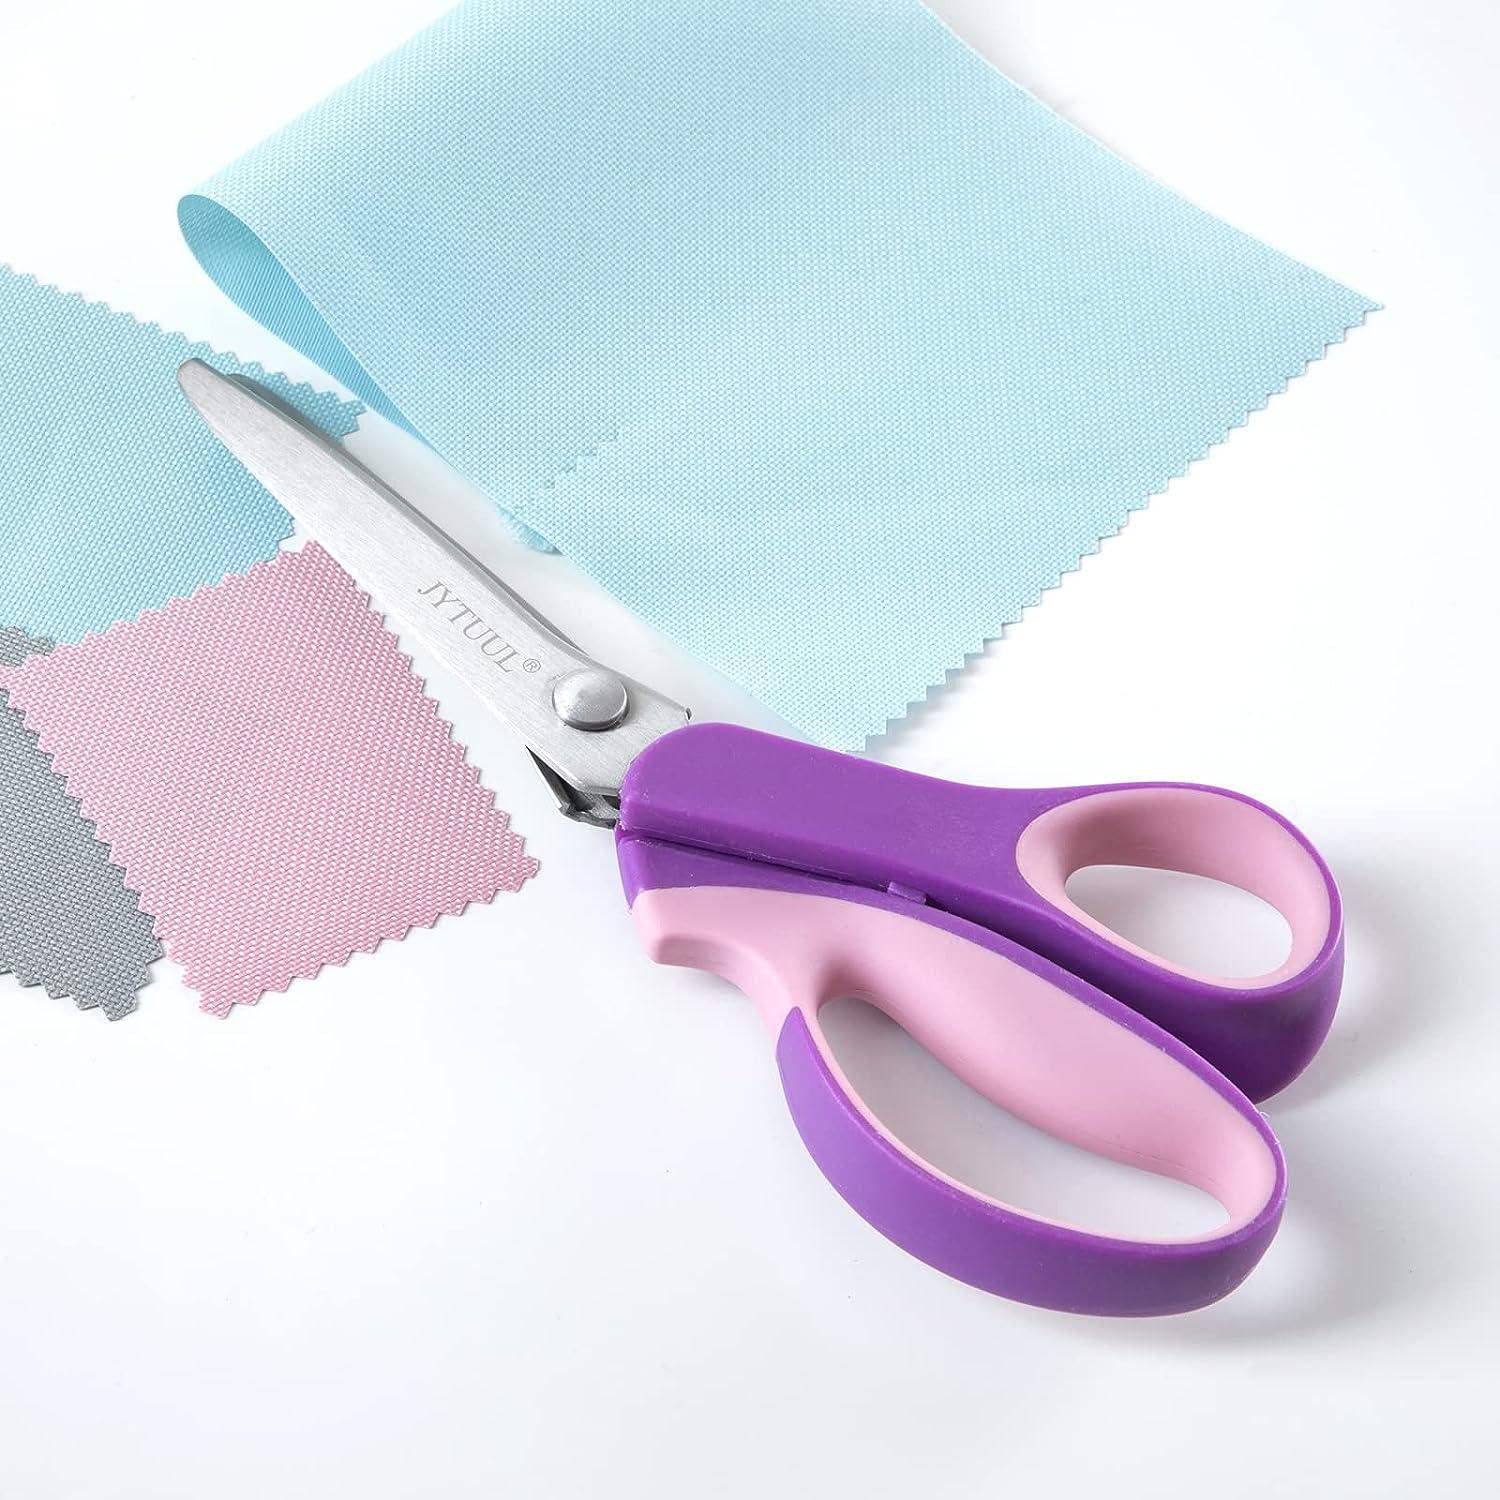 NEJLSD Pinking Shears for Fabric Ultra Sharp Comfort Grips